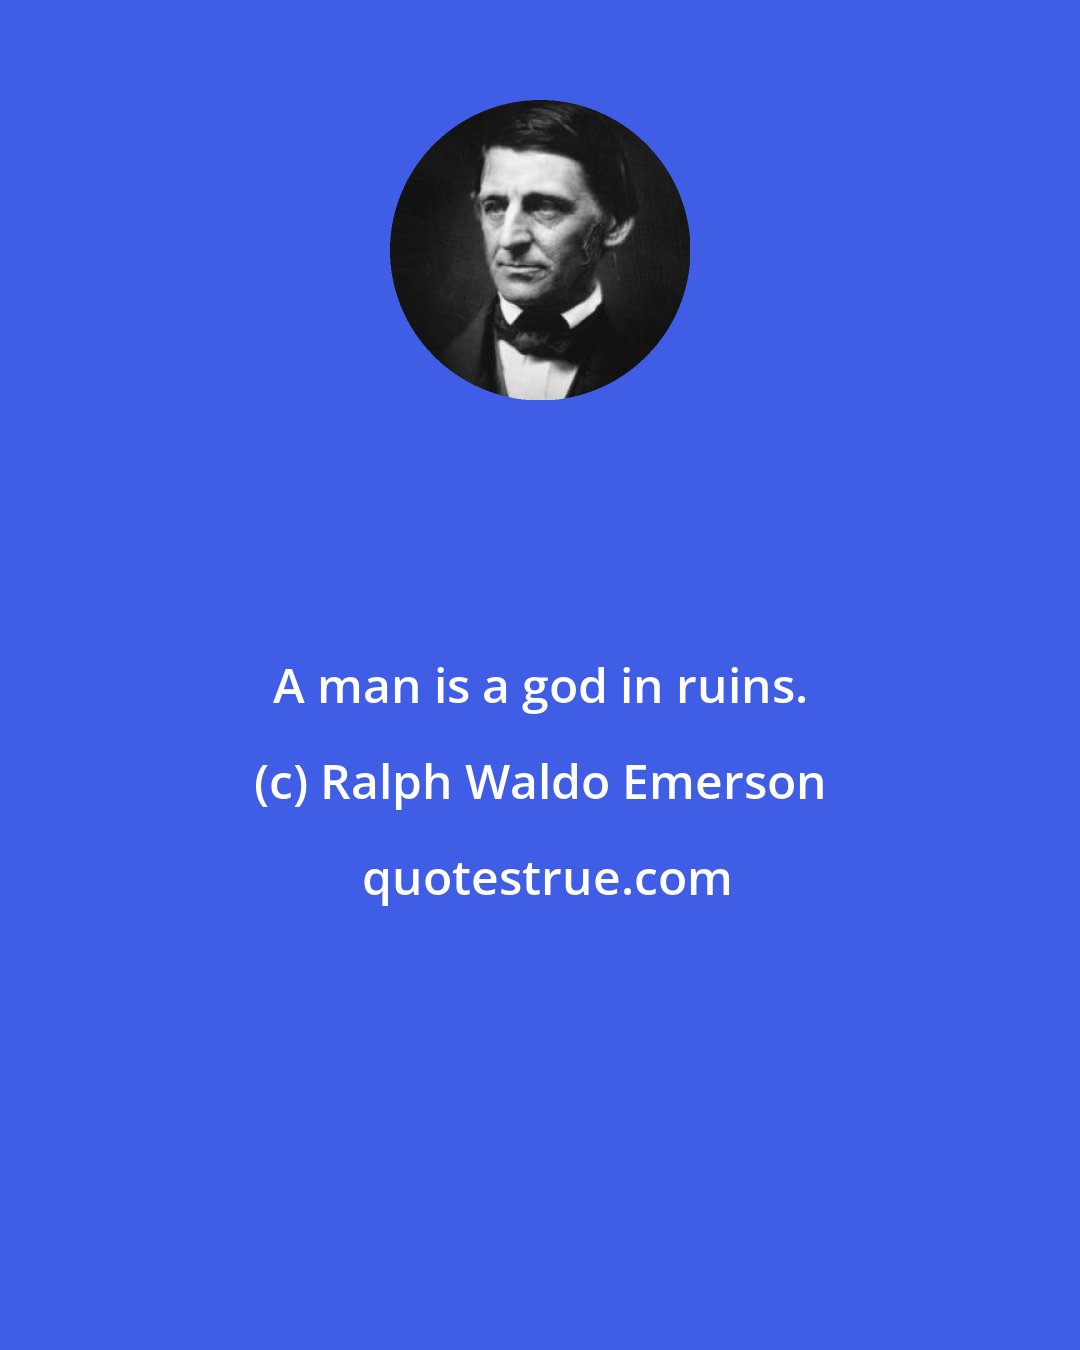 Ralph Waldo Emerson: A man is a god in ruins.